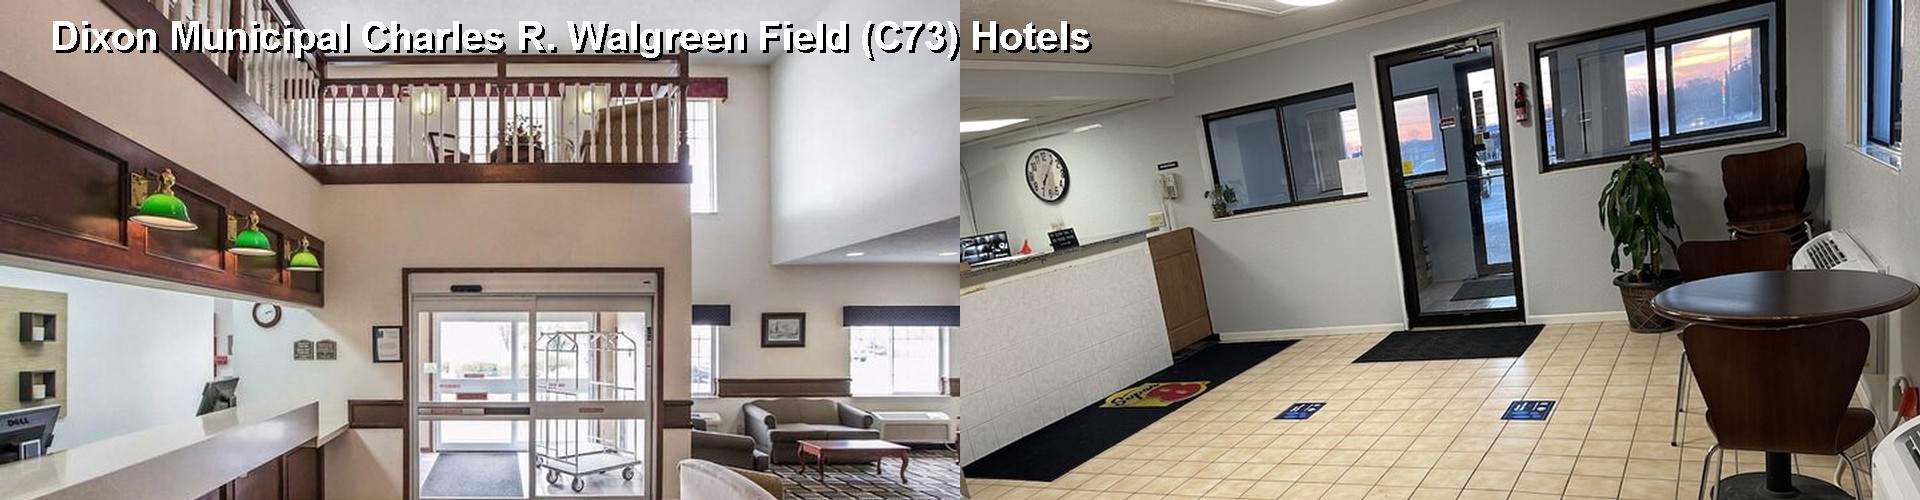 5 Best Hotels near Dixon Municipal Charles R. Walgreen Field (C73)